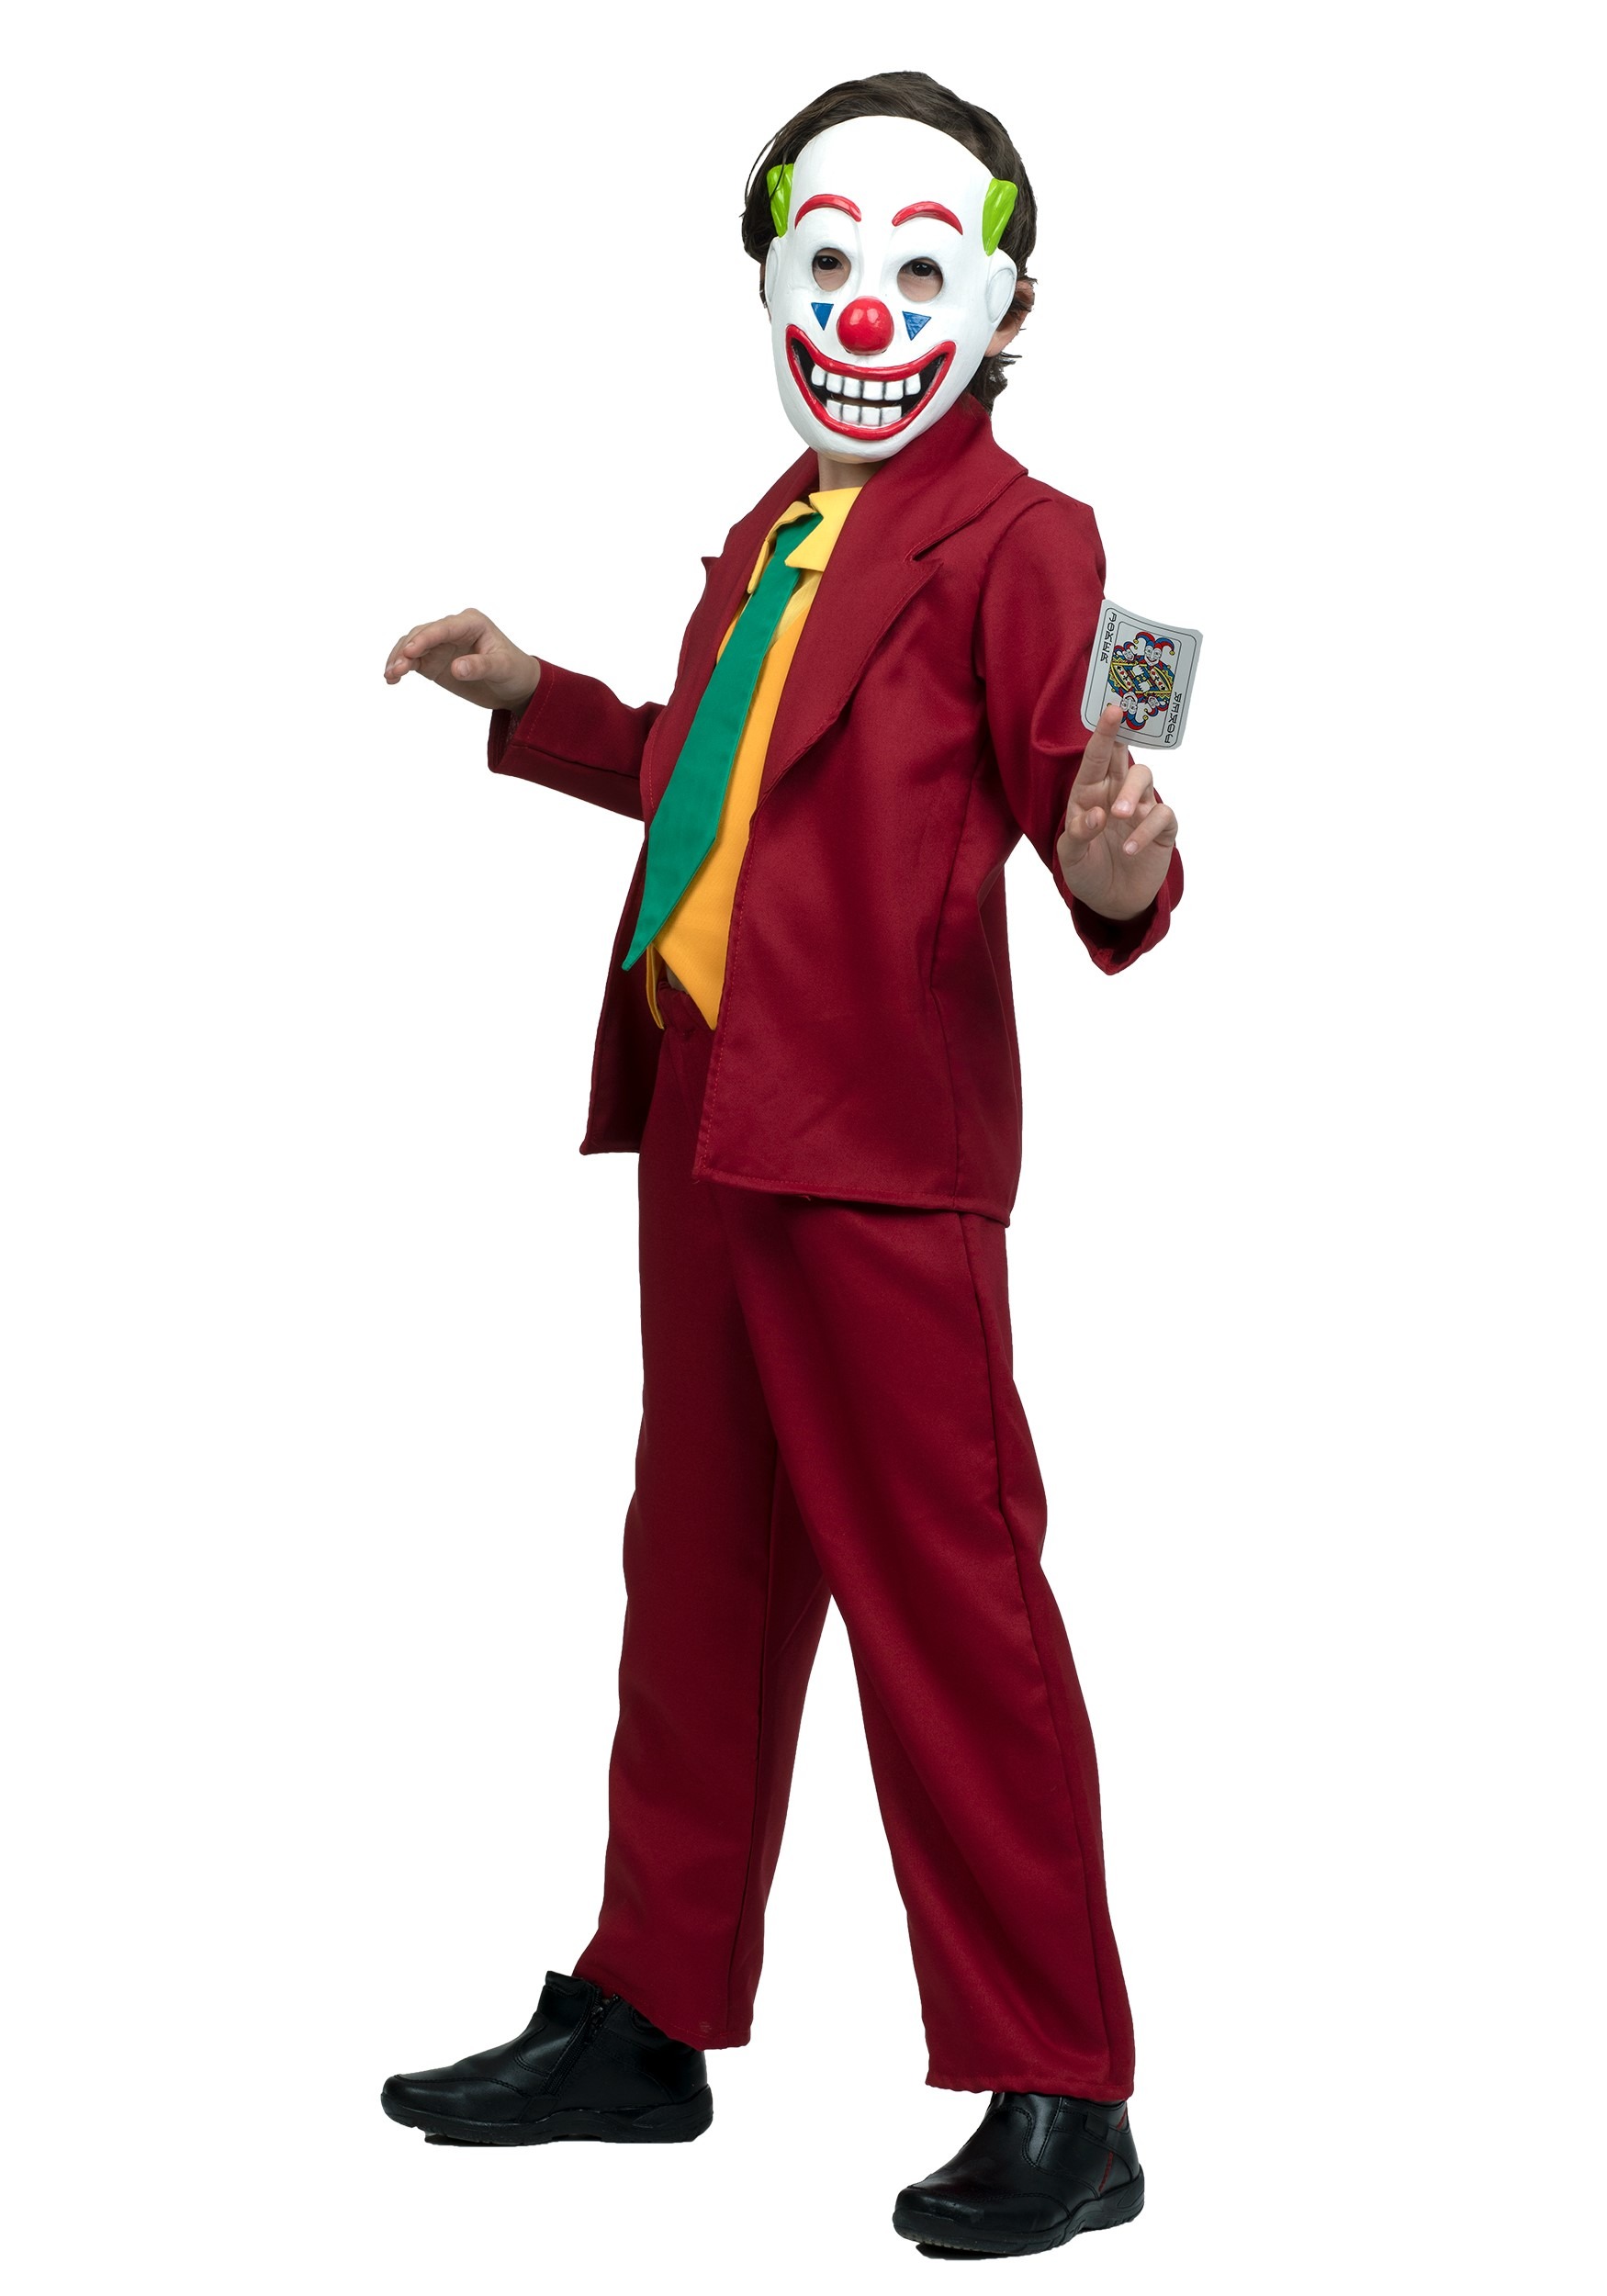 Kid's Joker Costume